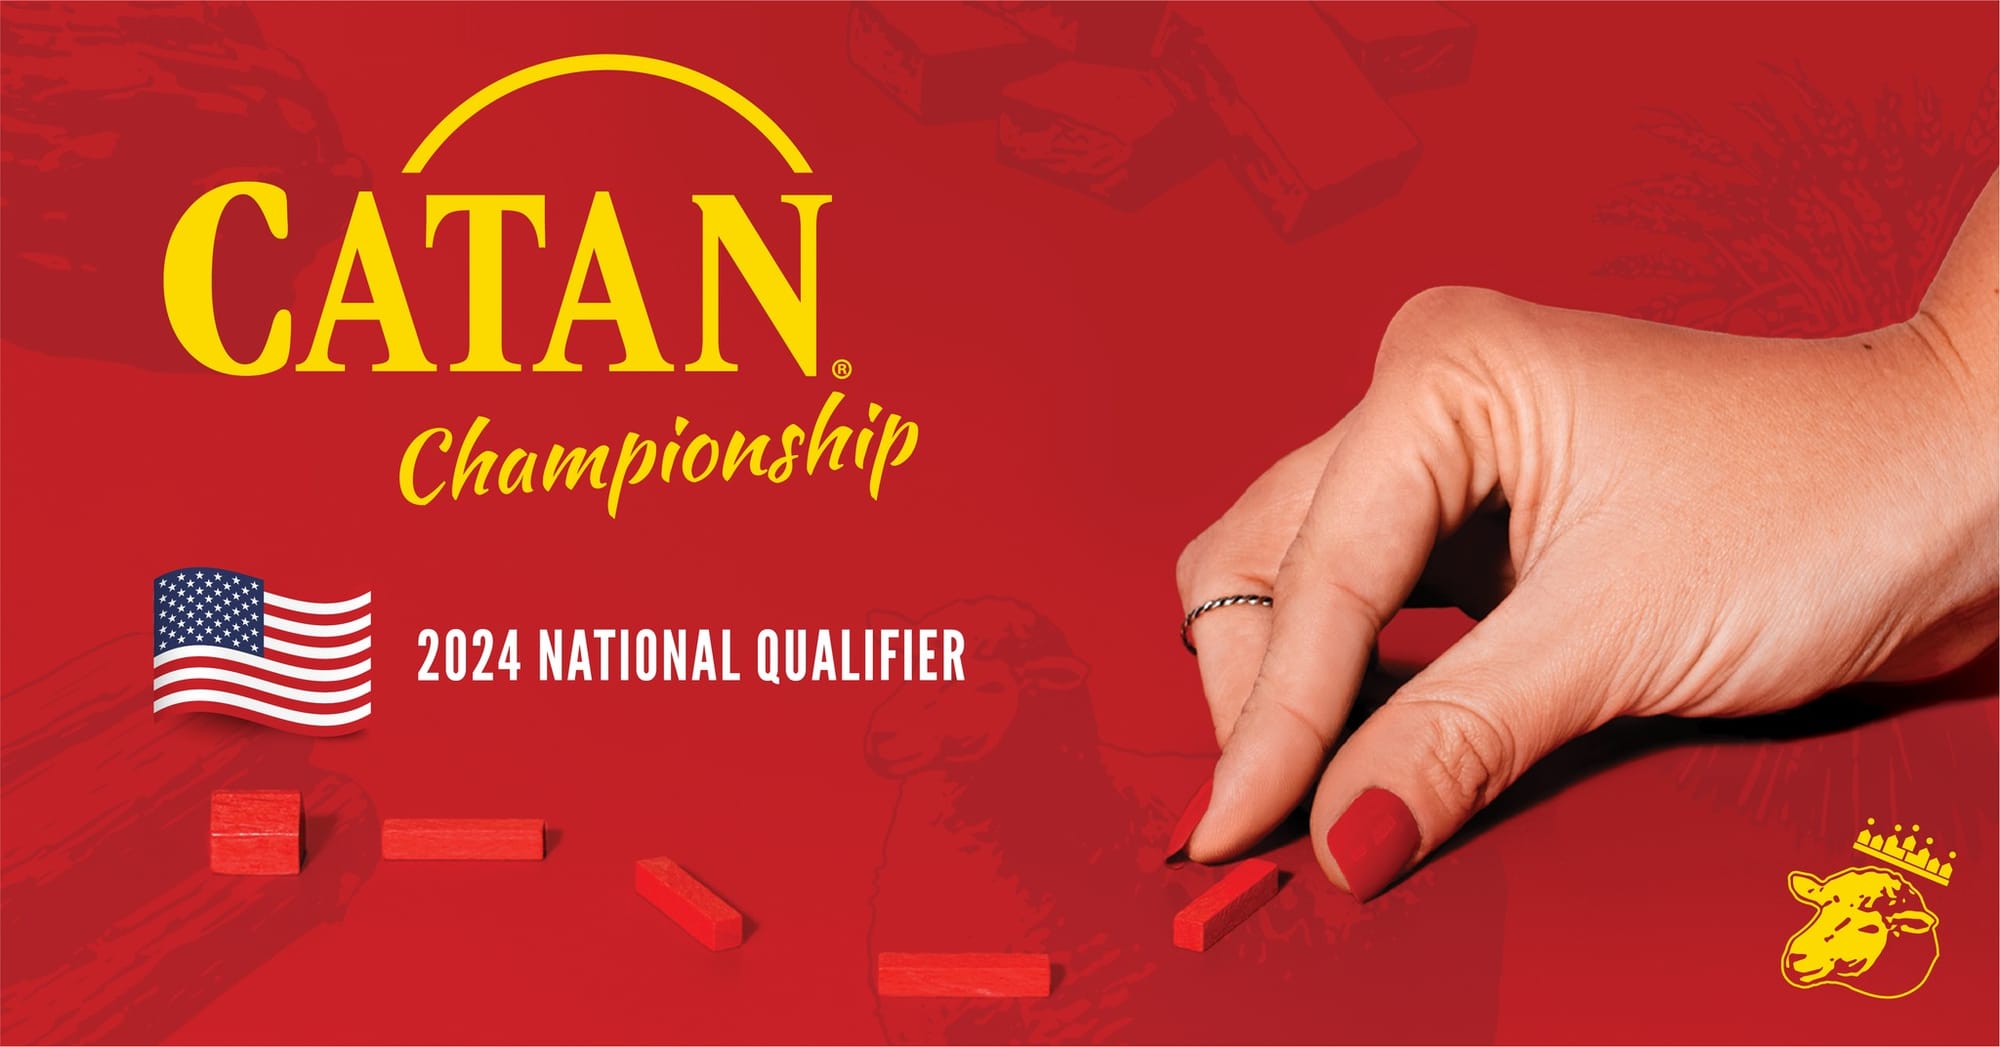 CATAN Championship 2024 National Qualifier